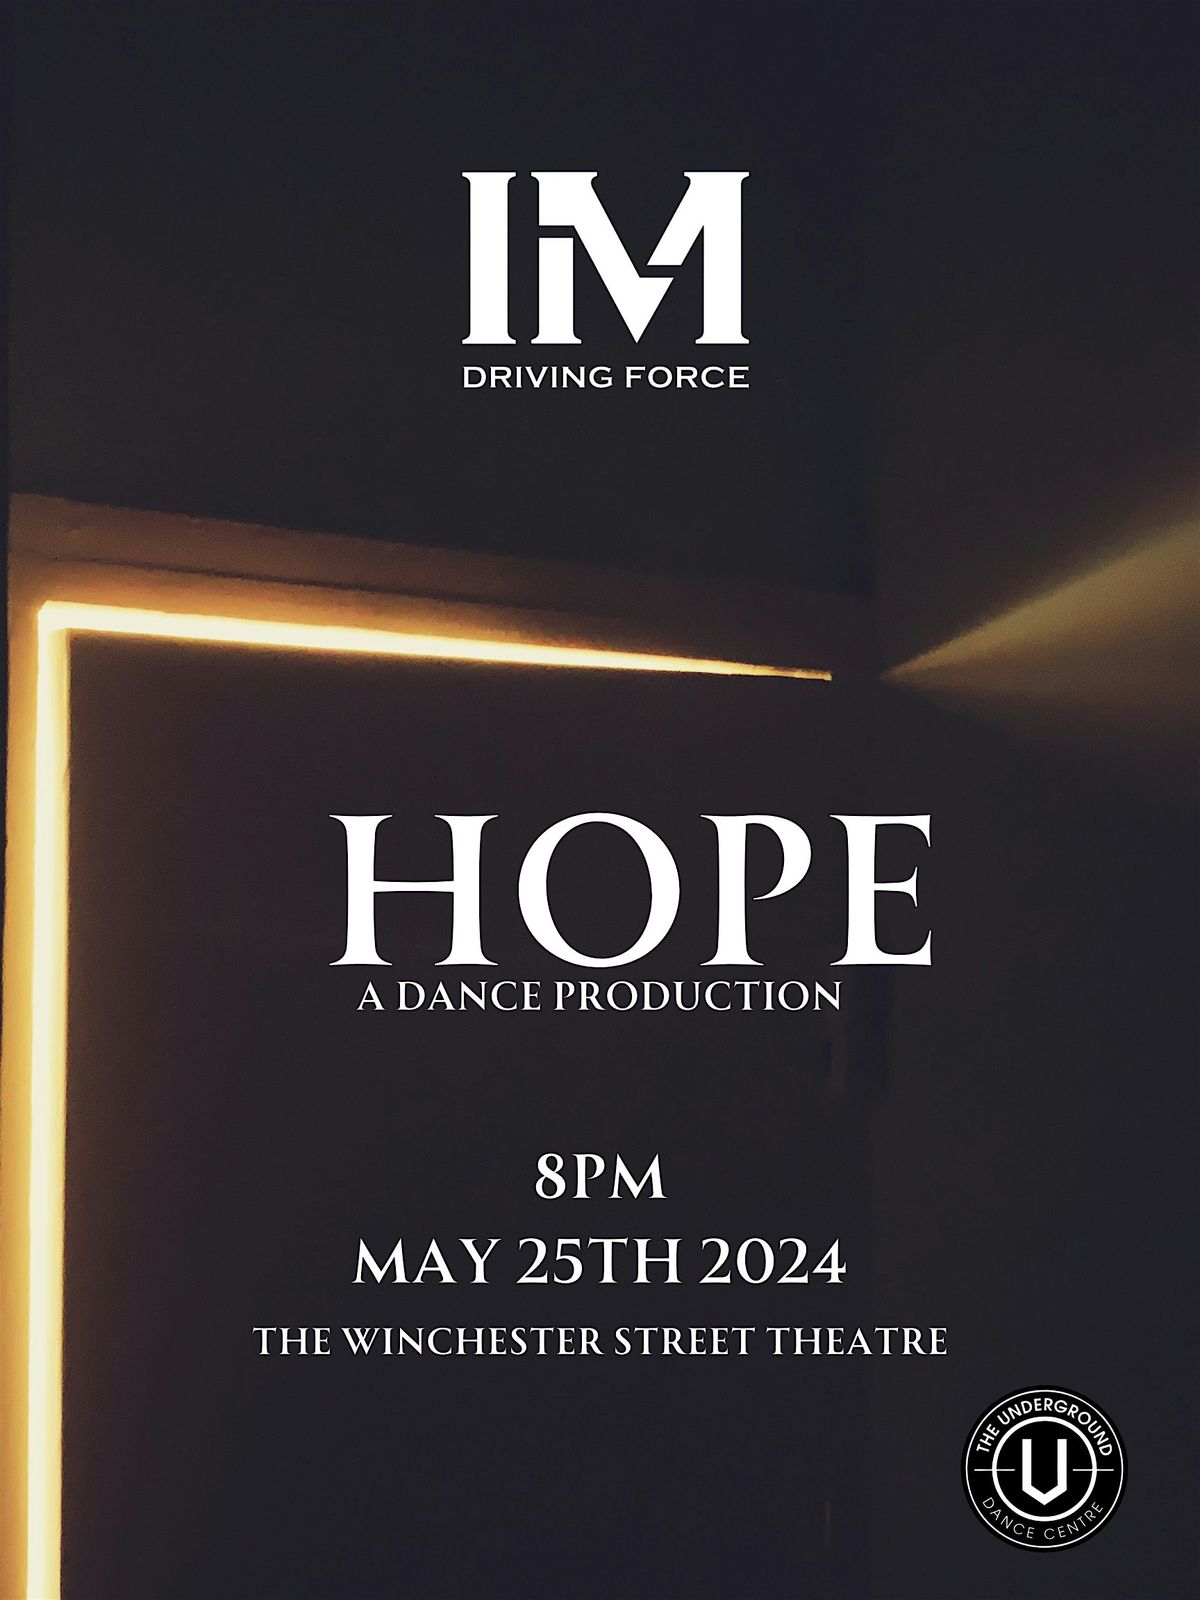 Impetus Movement Dance Company Presents: HOPE